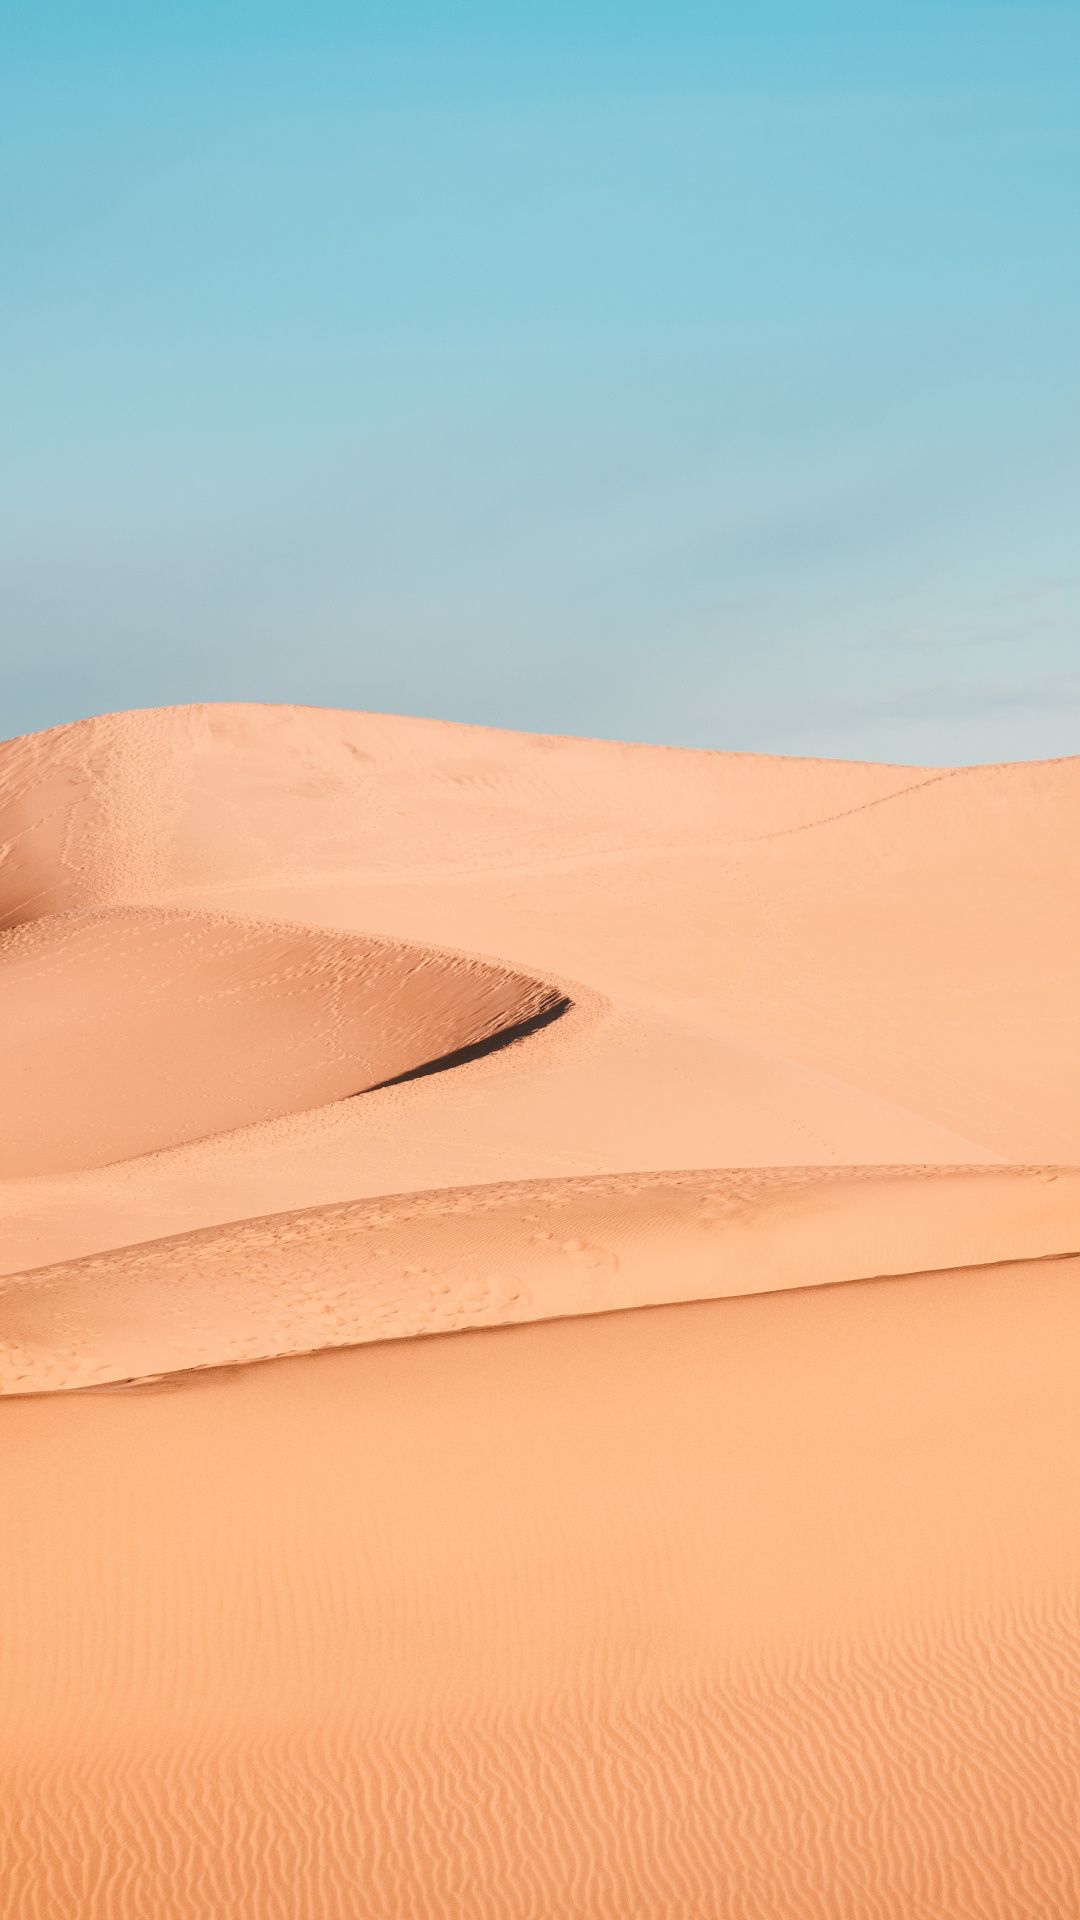 A man riding on top of sand dunes - Desert